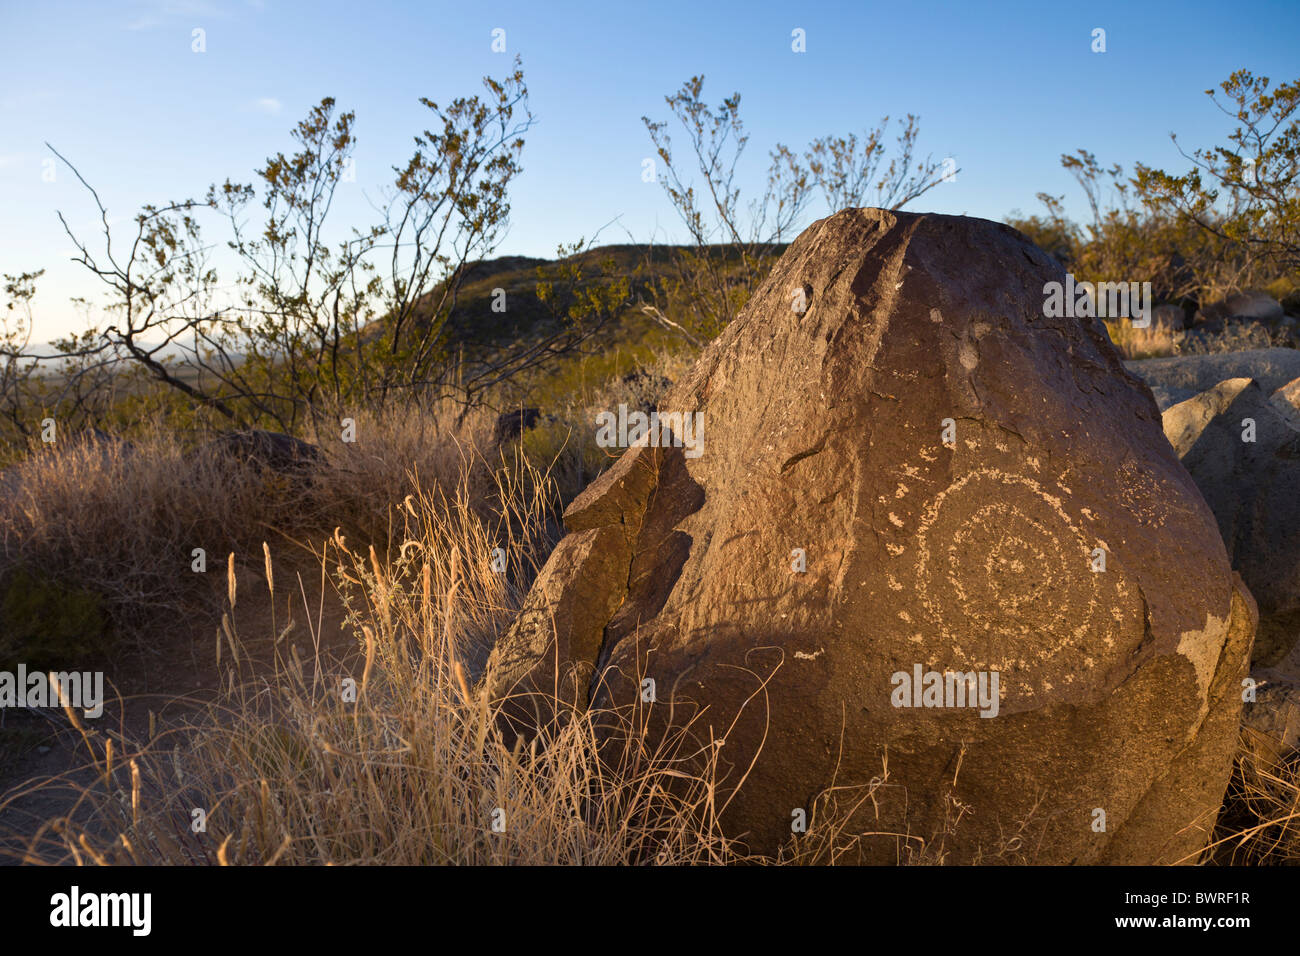 Petroglyph of circle and dot motif by the Jornada Mogollon Native Americans at the Three Rivers Petroglyph Site, New Mexico USA. Stock Photo